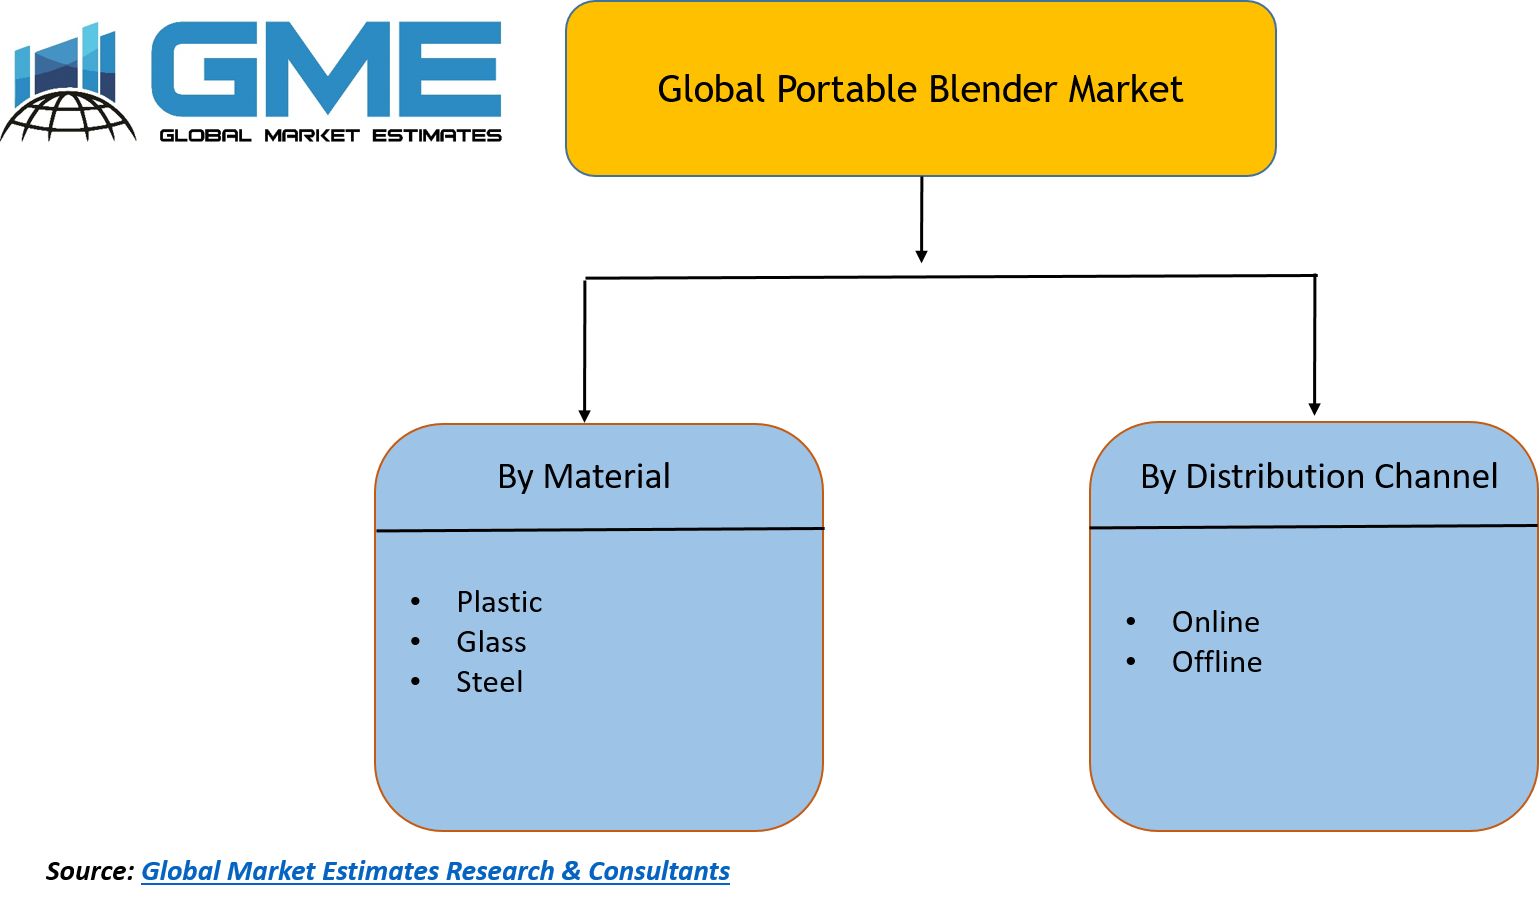 Global Portable Blender Market Segmentation